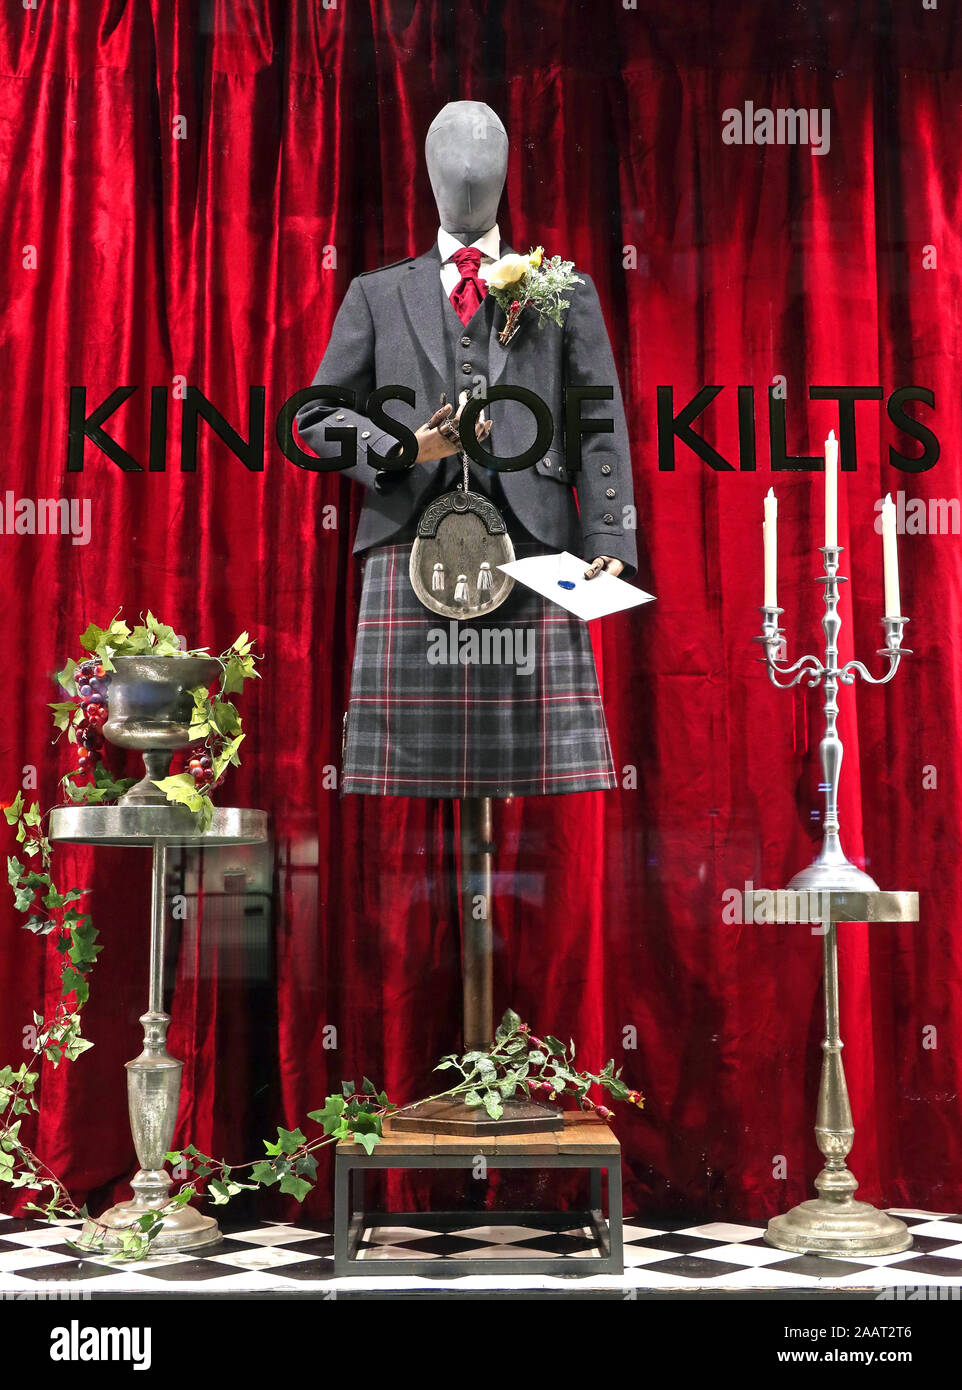 Kings of Kilts shop, 39 - 41 Bath Street, Glasgow, Scotland, UK G2 1HW, Kilt Store, MacGregor and MacDuff - Highland dress attire Stock Photo